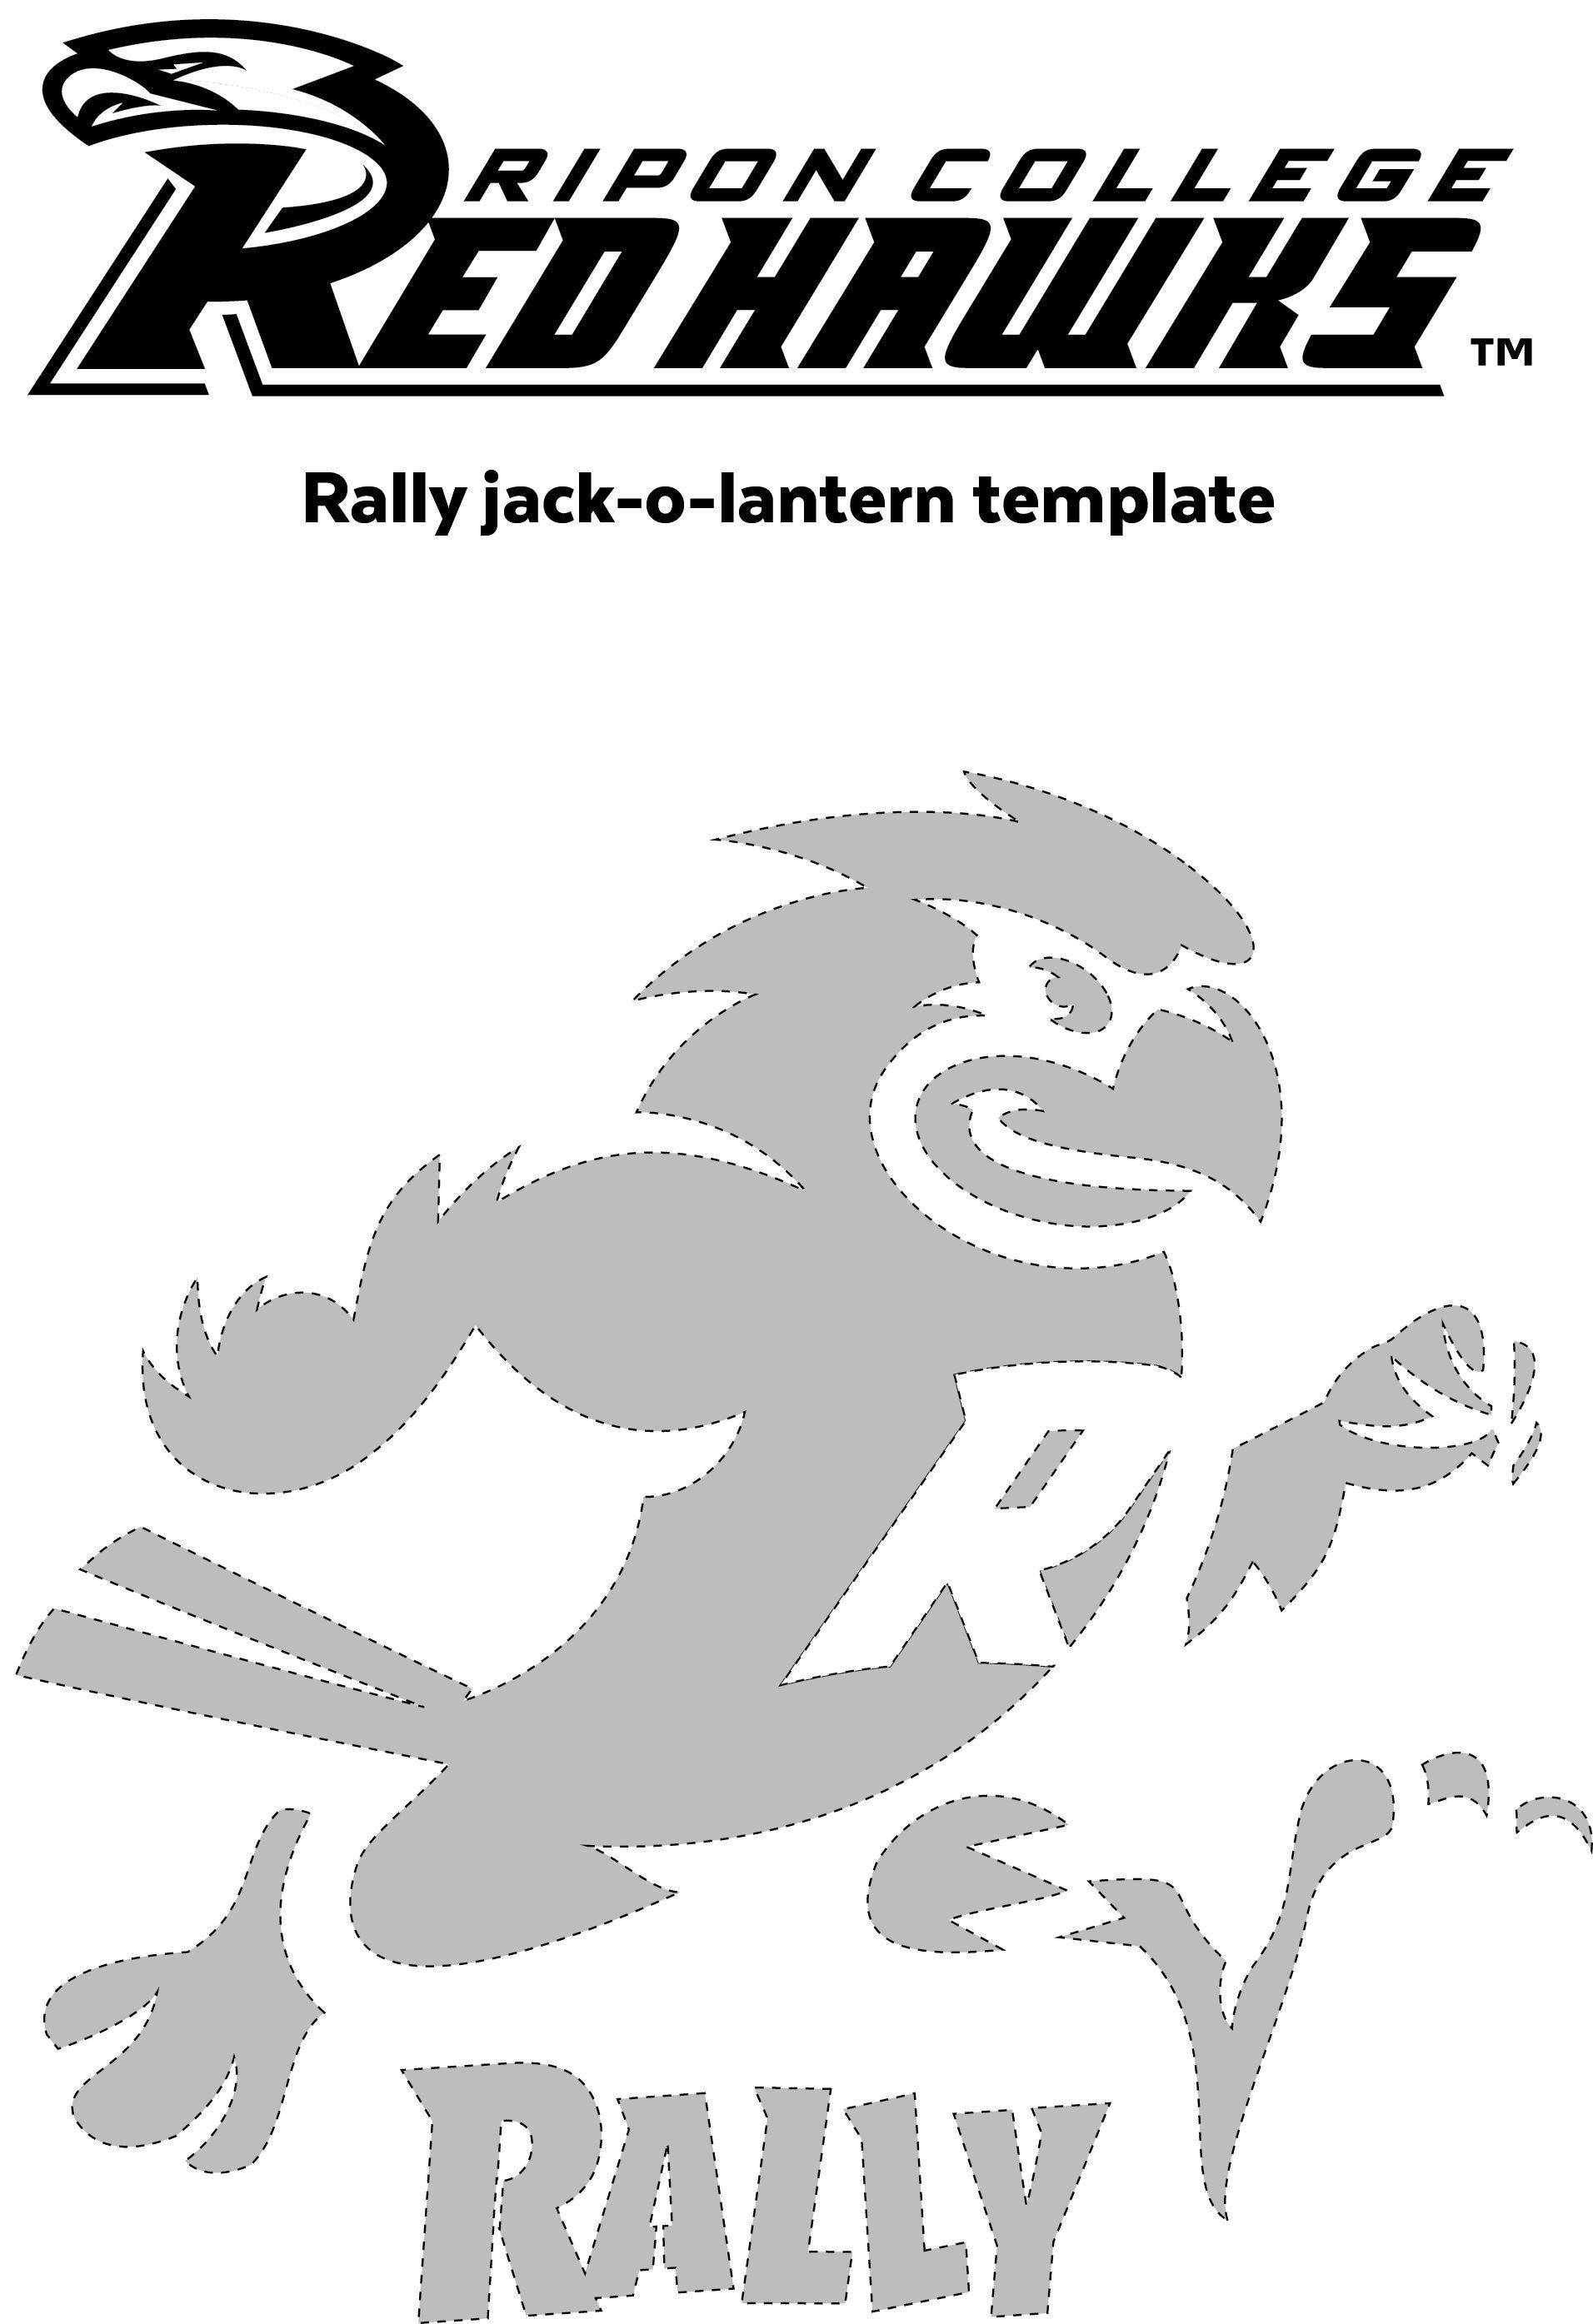 Red Hawk College Logo - Rally The Red Hawk Jack O Lantern Template. Ripon College Halloween